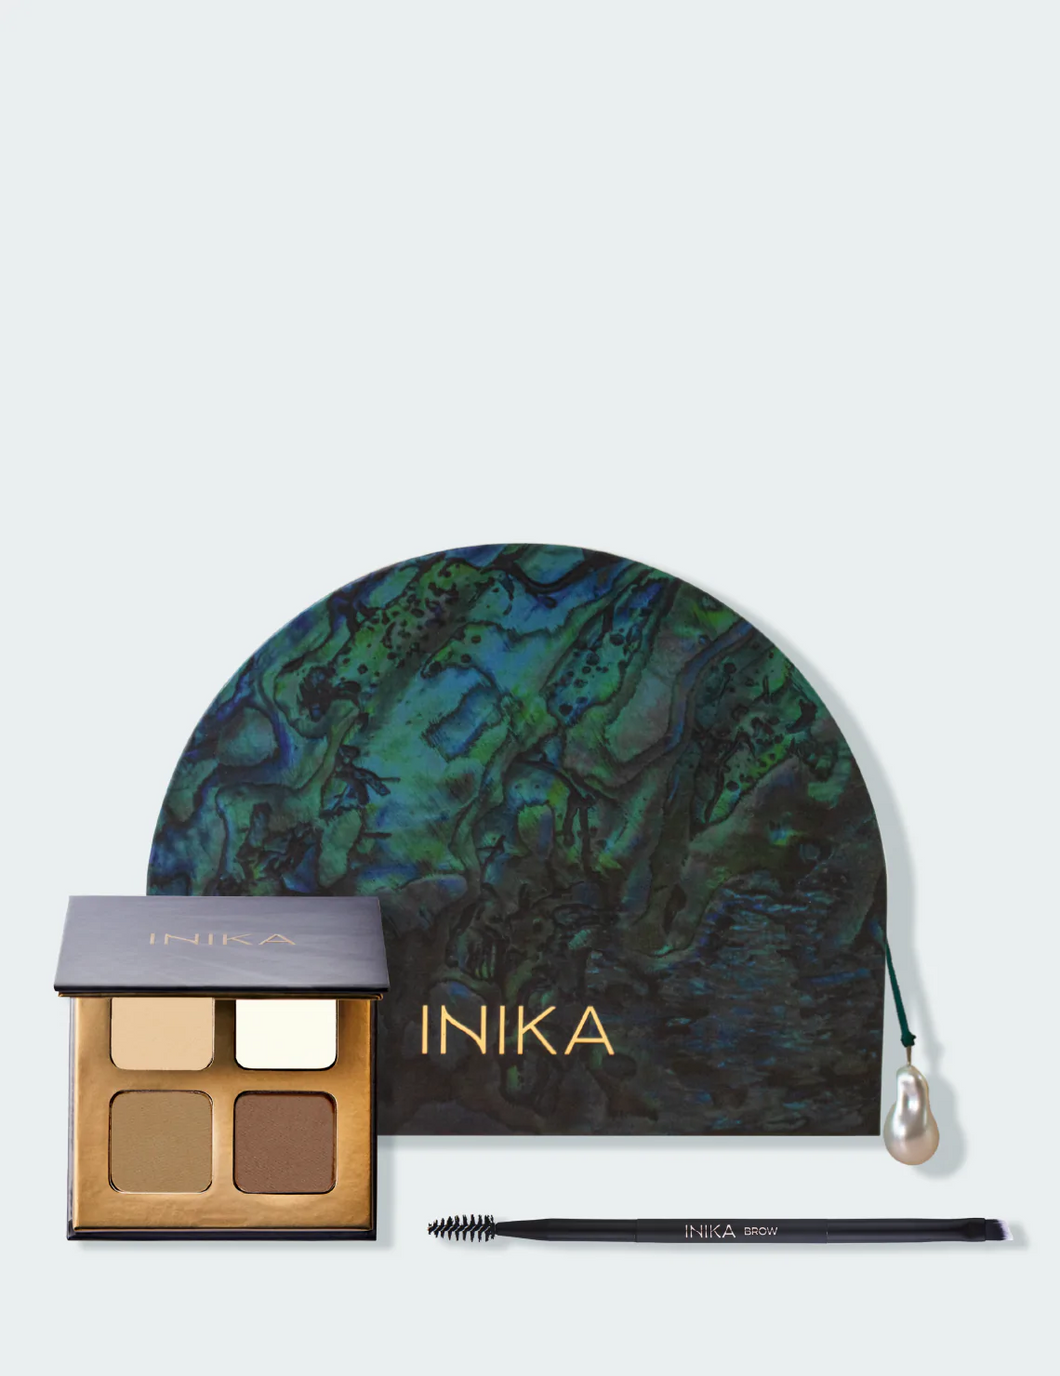 INIKA Organic Ultramarine Natural Brow Set